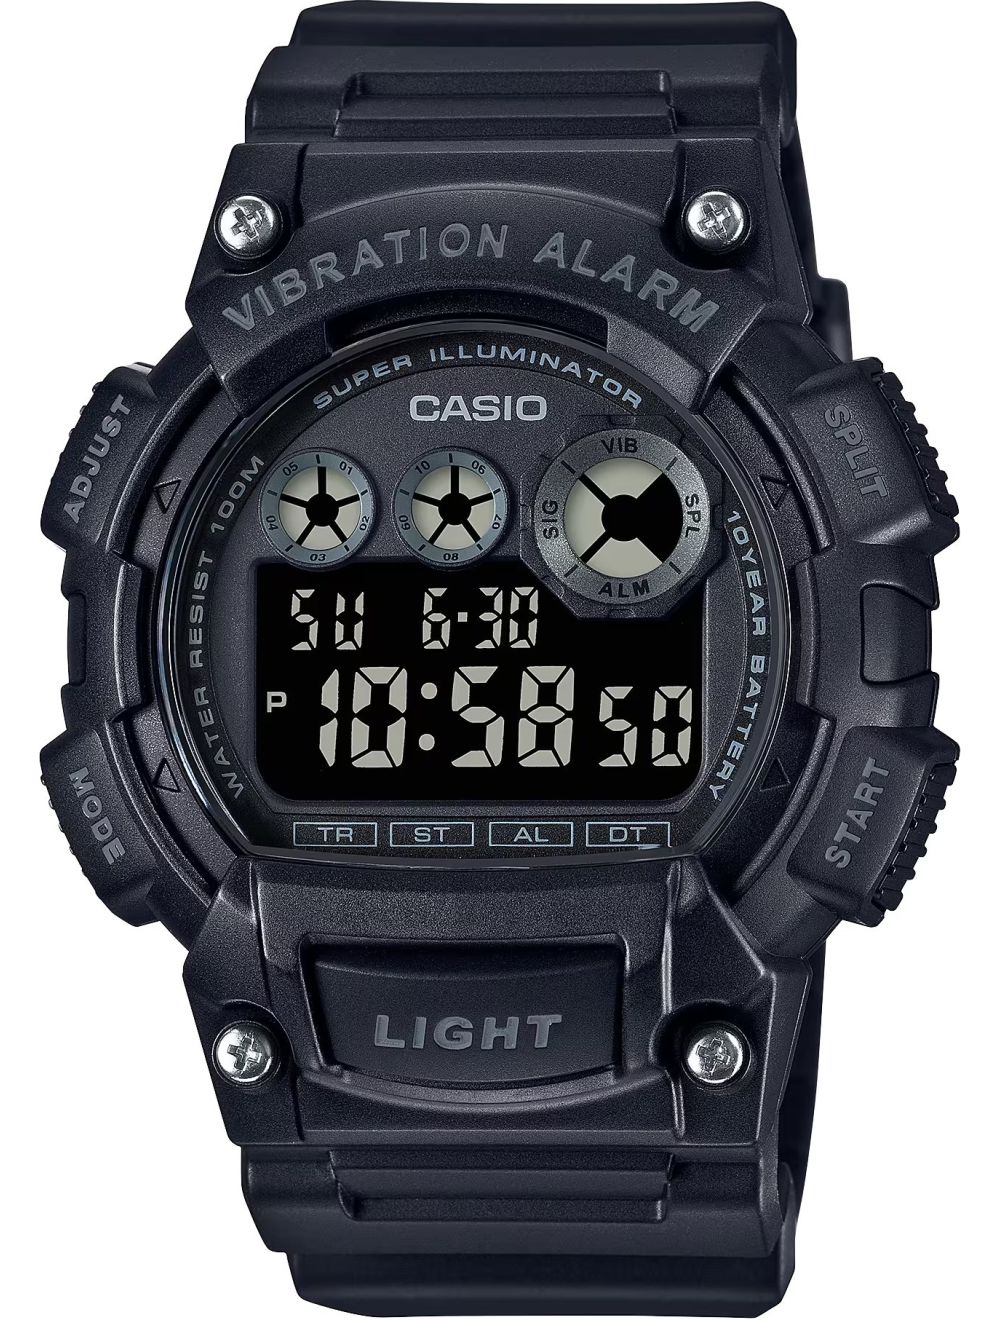 Classic Digital Watch w/ Vibration Alarm & Super Bright Backlight